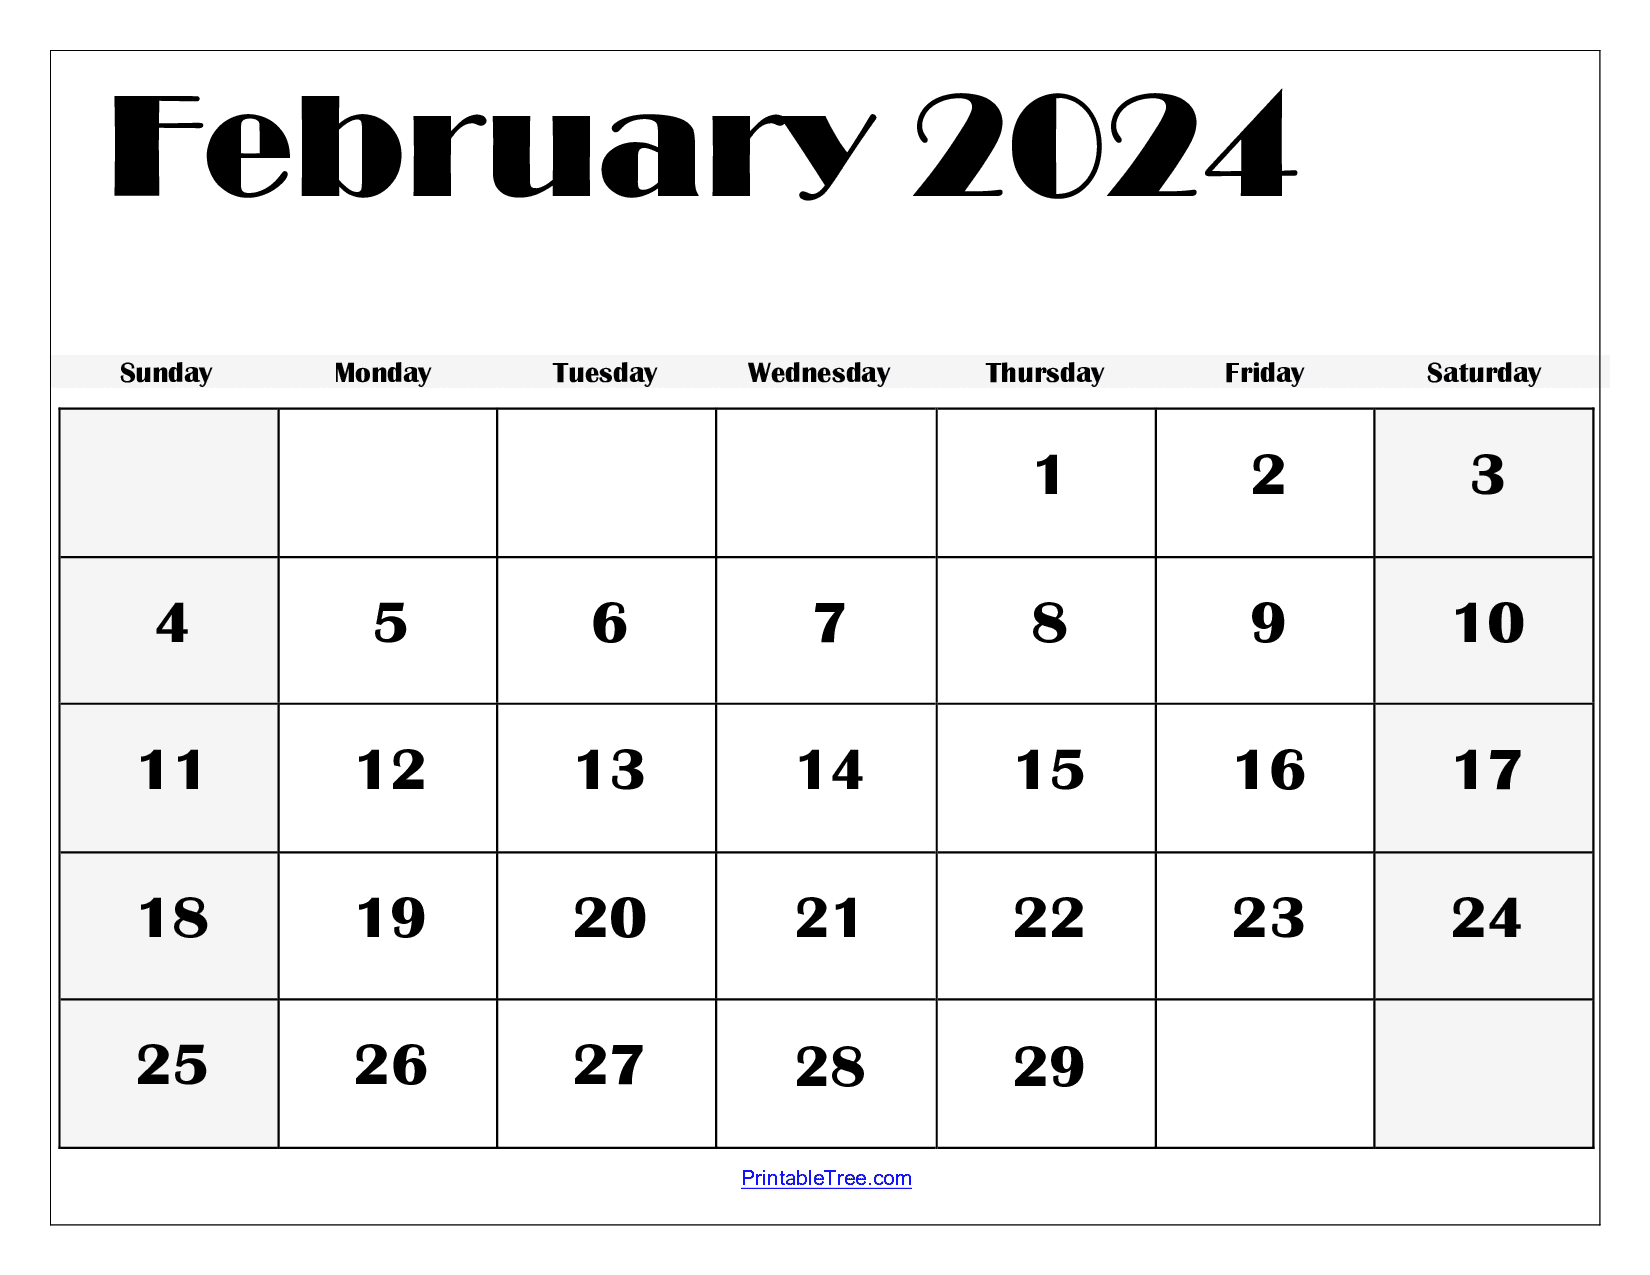 February 2024 Calendar Printable Pdf Template With Holidays for Blank February 2024 Calendar Printable